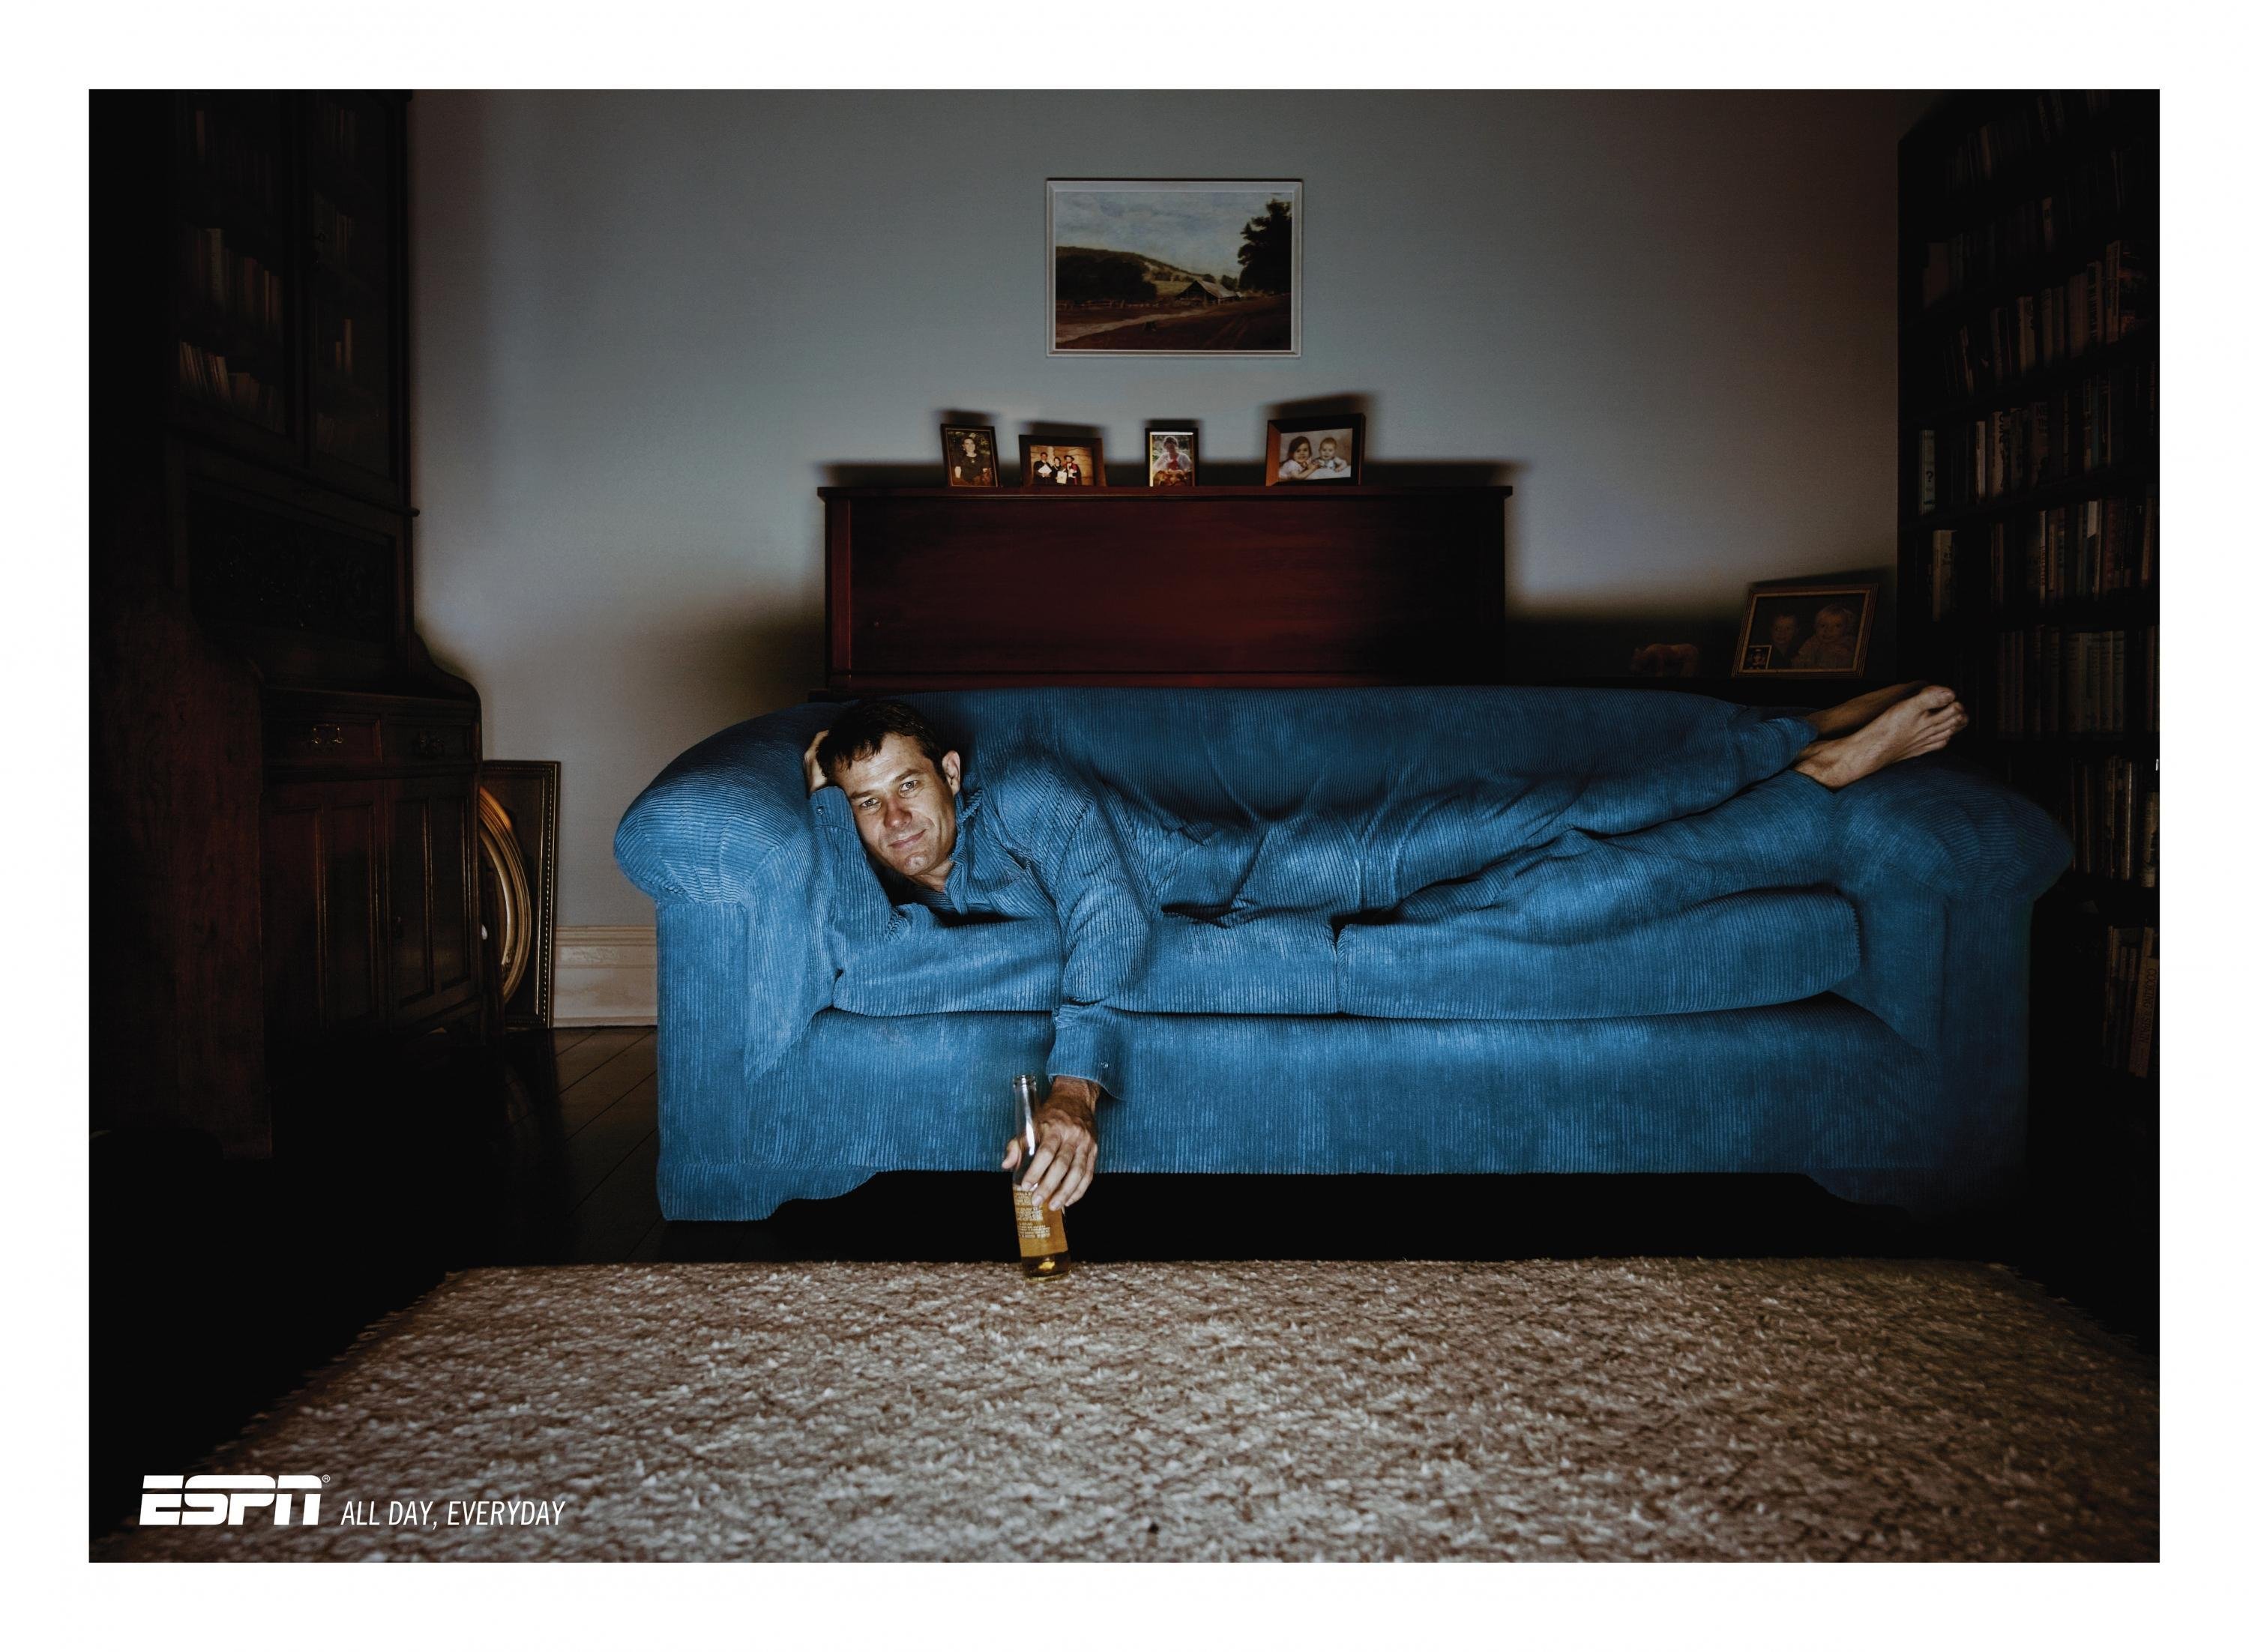 Уже на диване давно. Человек на диване. Креативная реклама мягкой мебели. Лежит на диване. Человек лежит на диване.